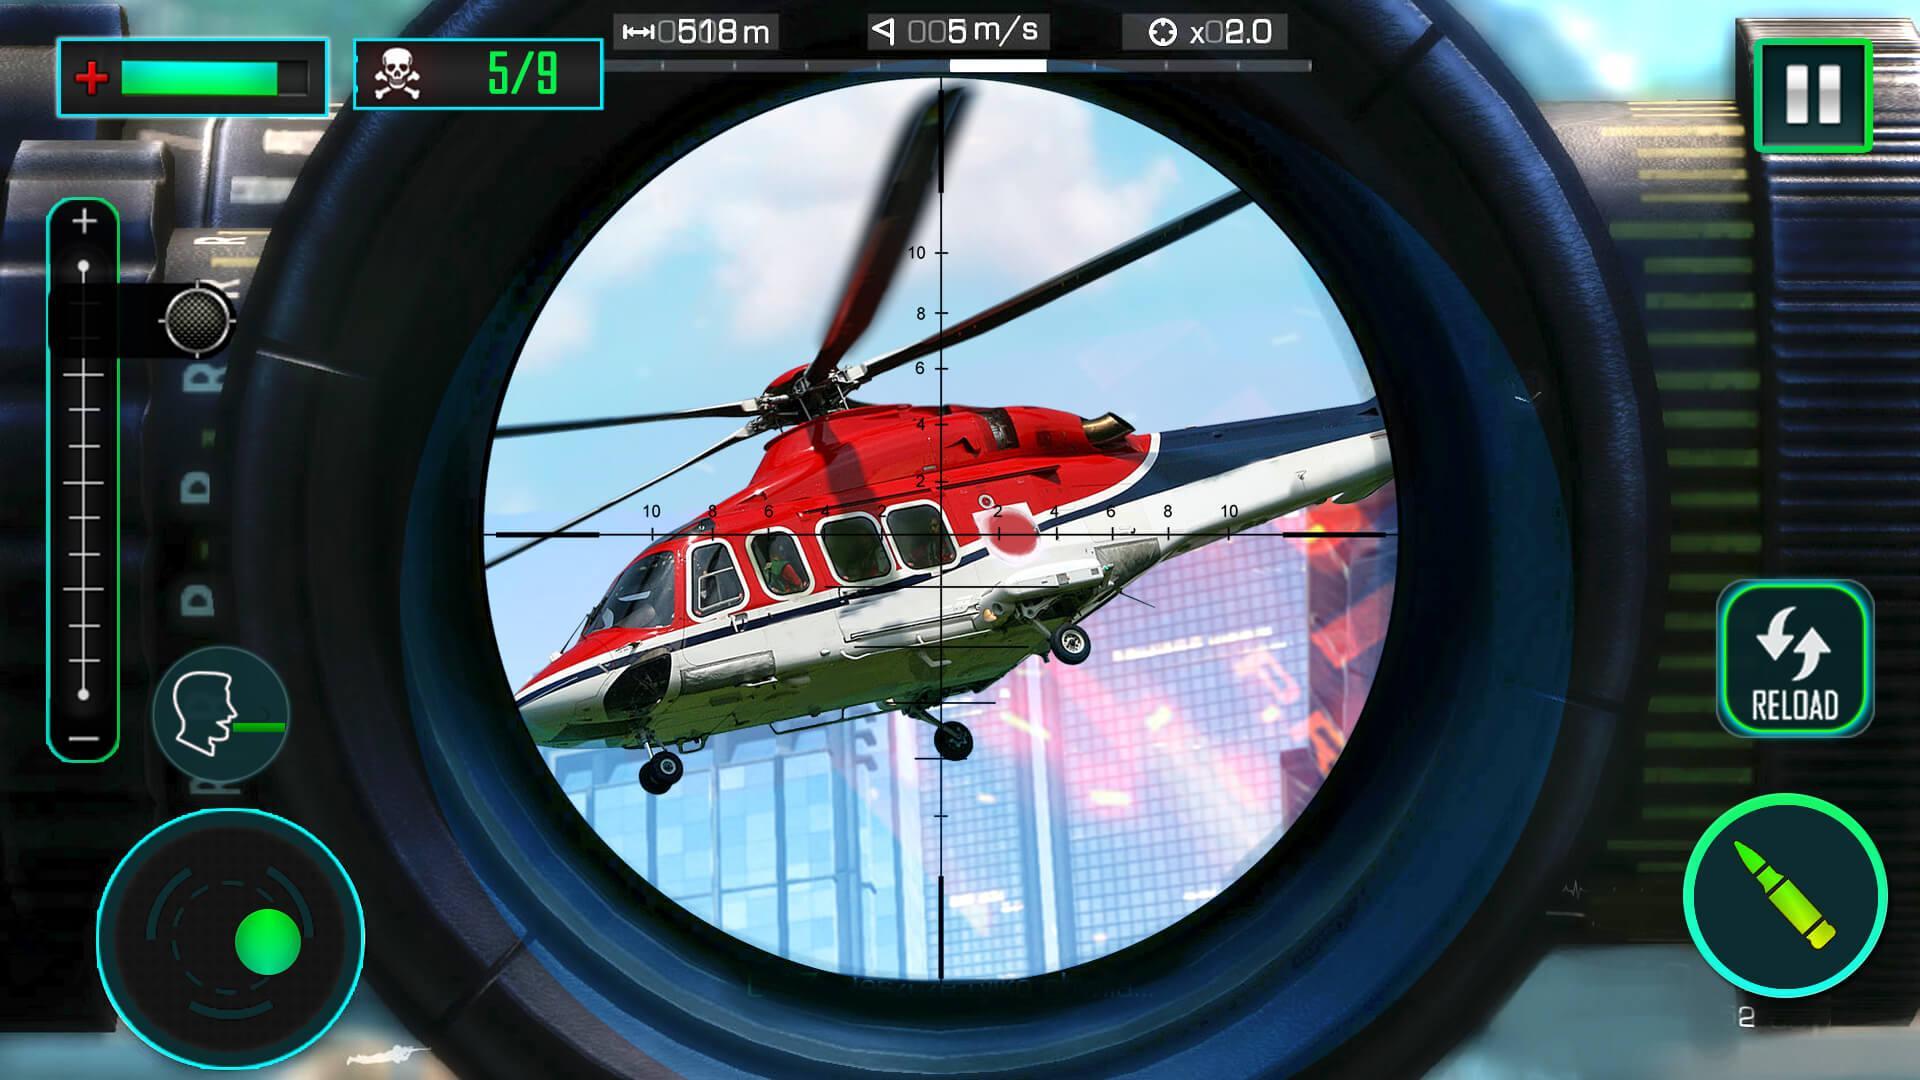 Screenshot 1 of स्निपर एफपीएस 3डी गन शूटर फ्री गेम 